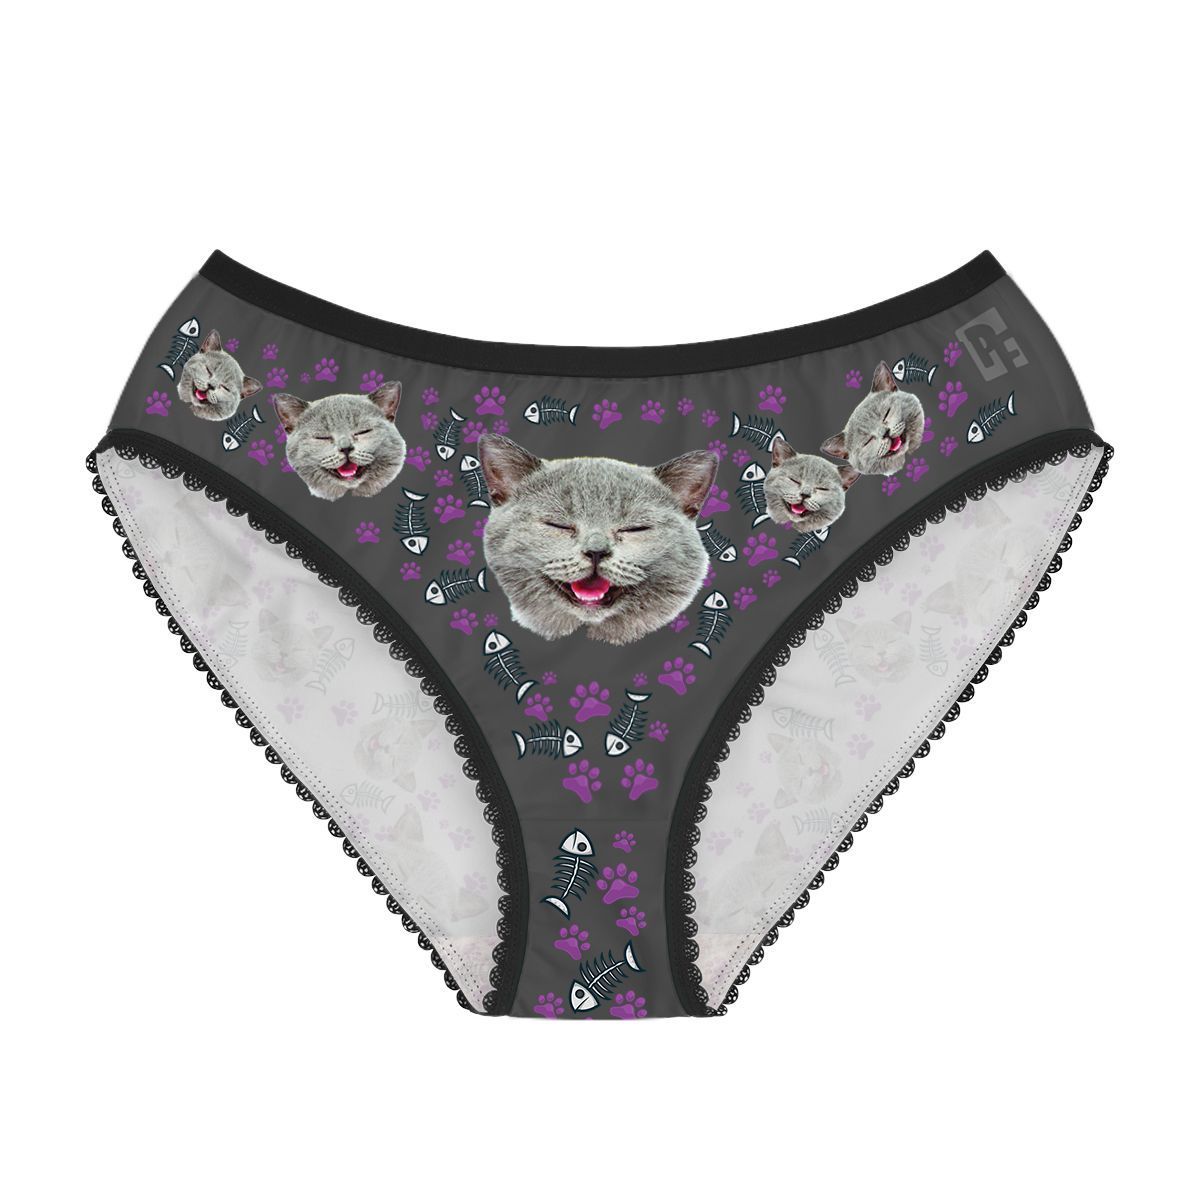 Dark Cat women's underwear briefs personalized with photo printed on them